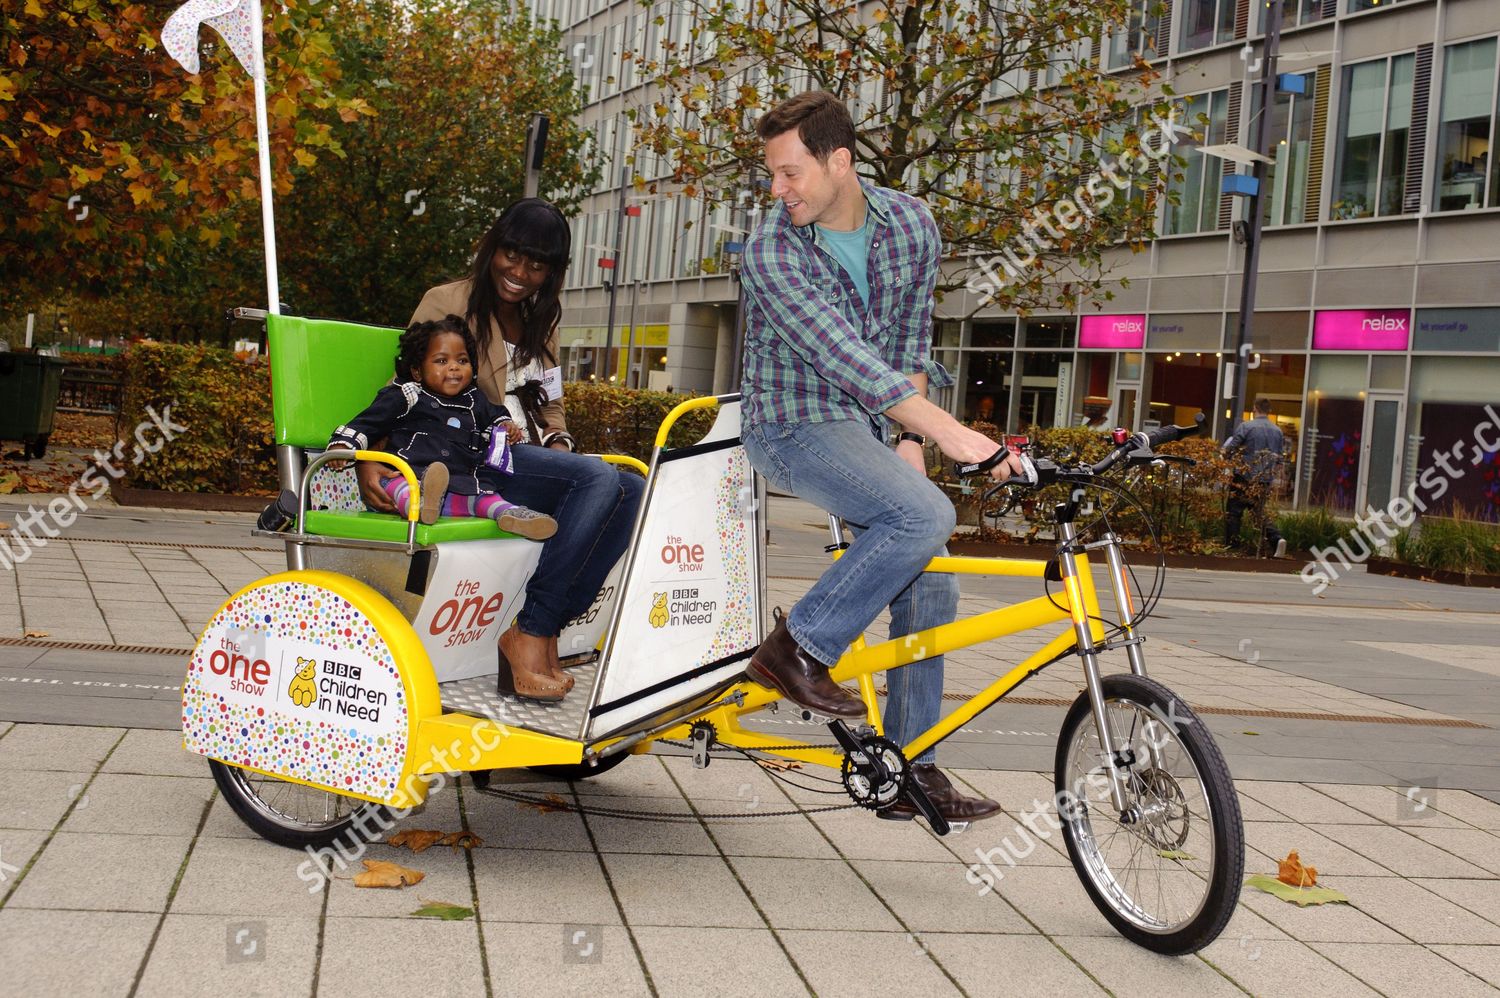 matt-baker-children-in-need-cycle-ride-london-britain-shutterstock-editorial-1489940l.jpg